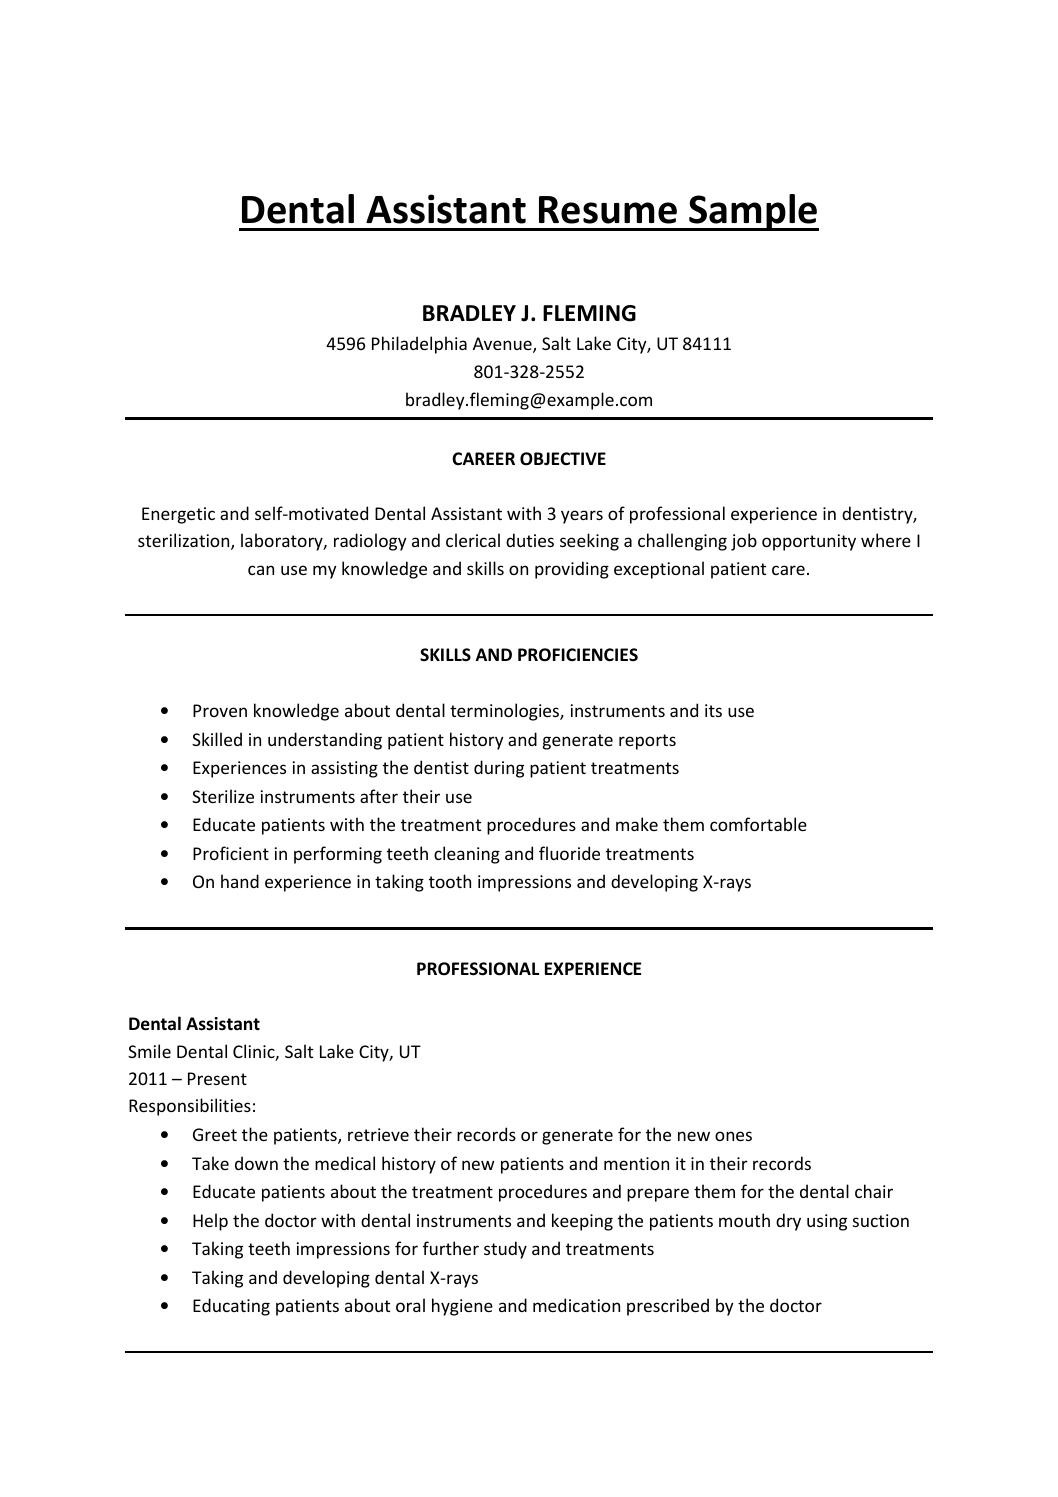 Sample Of Resume for Dental assistant Dental assistant Resume Sample by Mark Stone – issuu